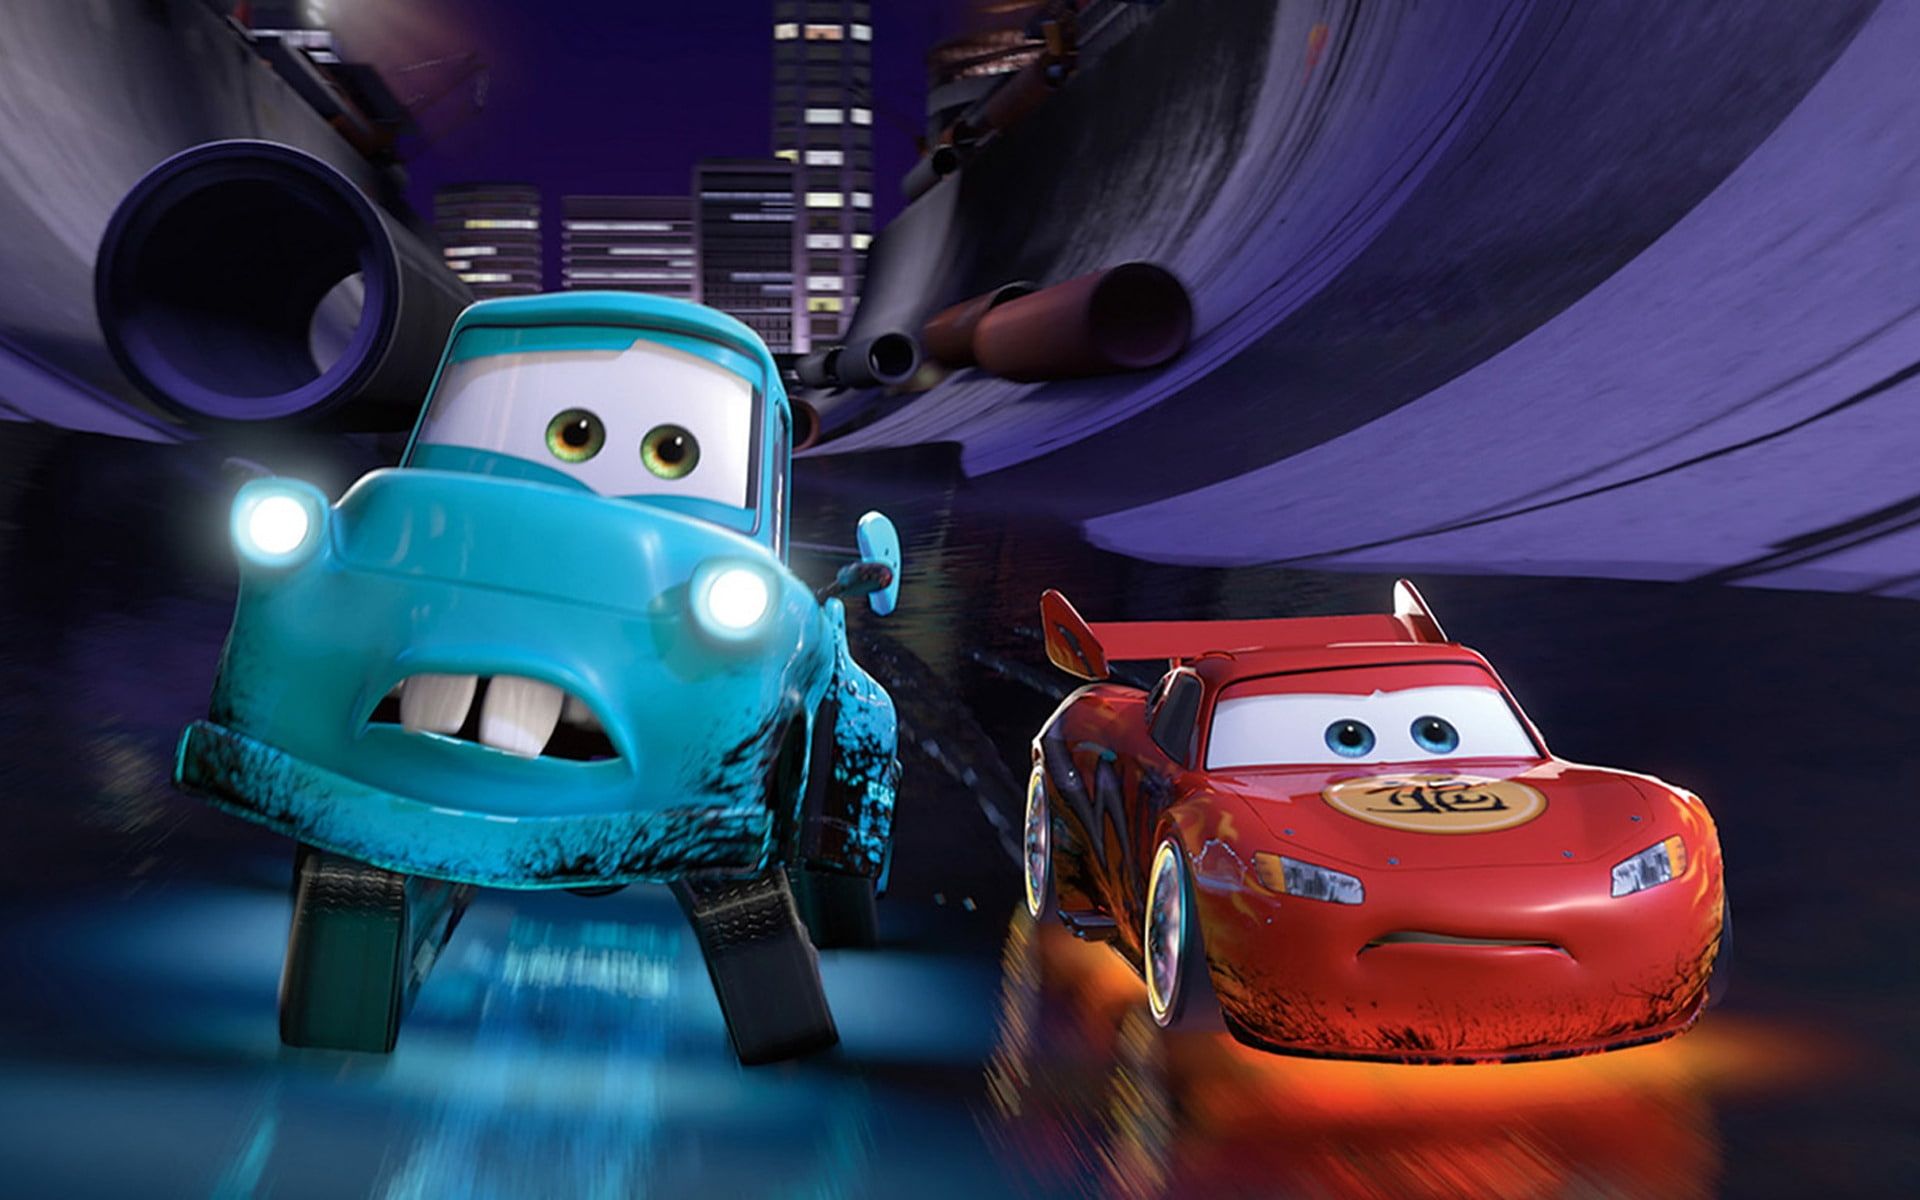 HD wallpaper: Cars 2 Lightning McQueen and Mater, animation, pixar, adventu...